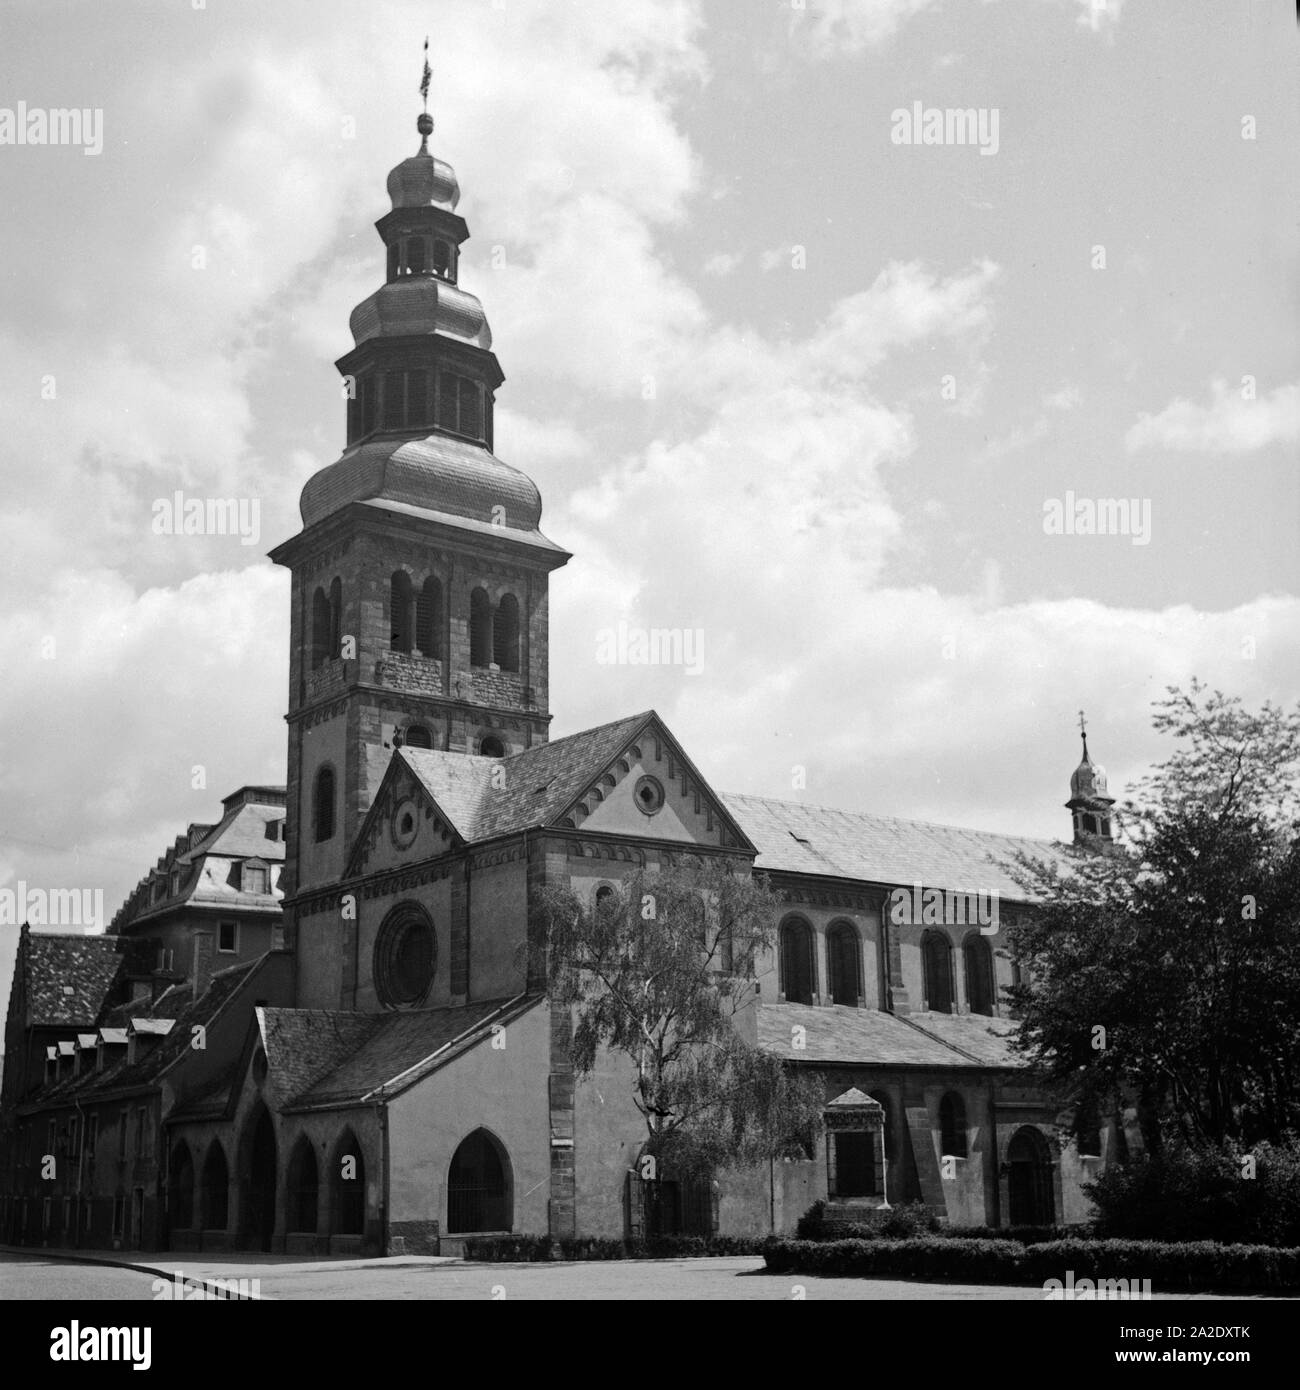 Die Kirche San Martin im Norden der Altstadt von Worms, Deutschland 1930er Jahre. La chiesa di San Martino a nord della città vecchia di Worms, Germania 1930s. Foto Stock